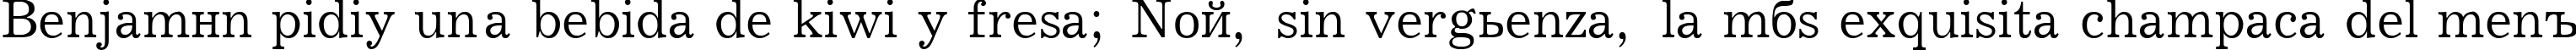 Пример написания шрифтом Journal95 текста на испанском